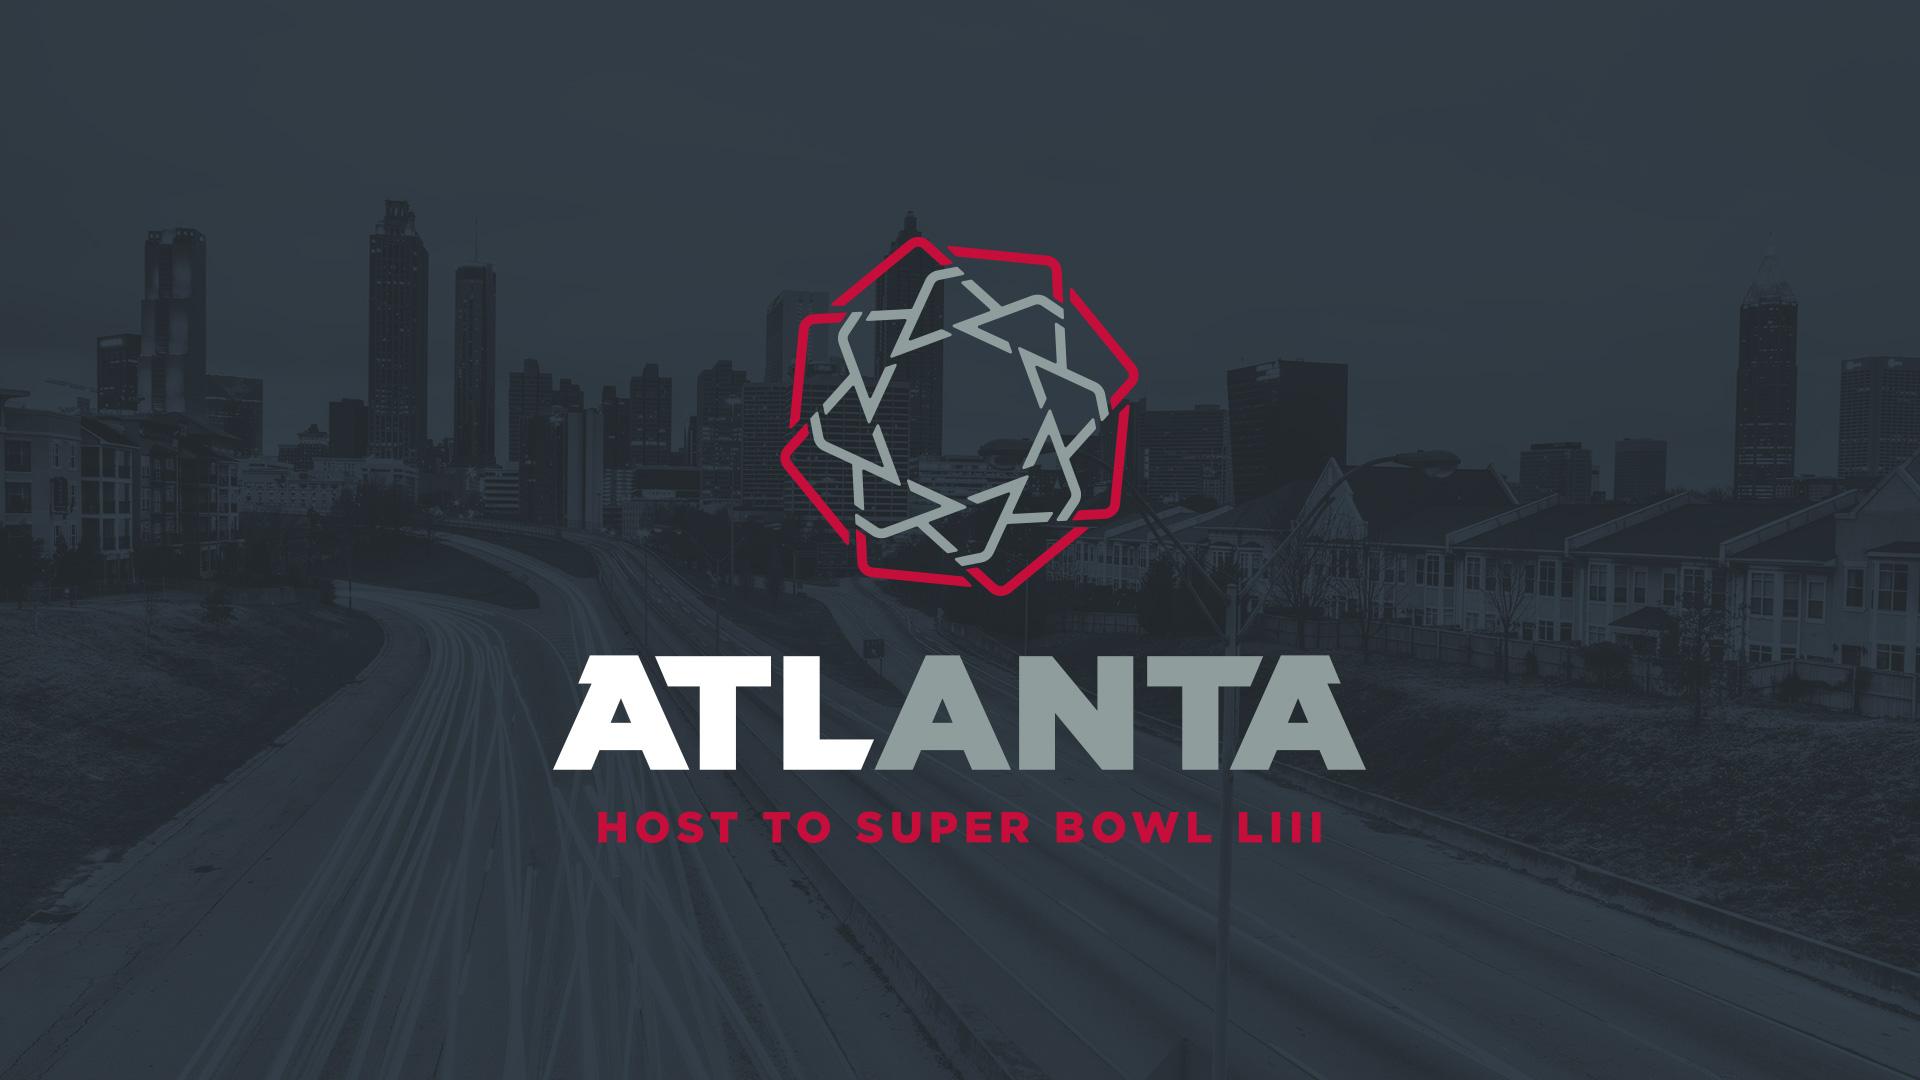 Super Bowl LIII Host Committee